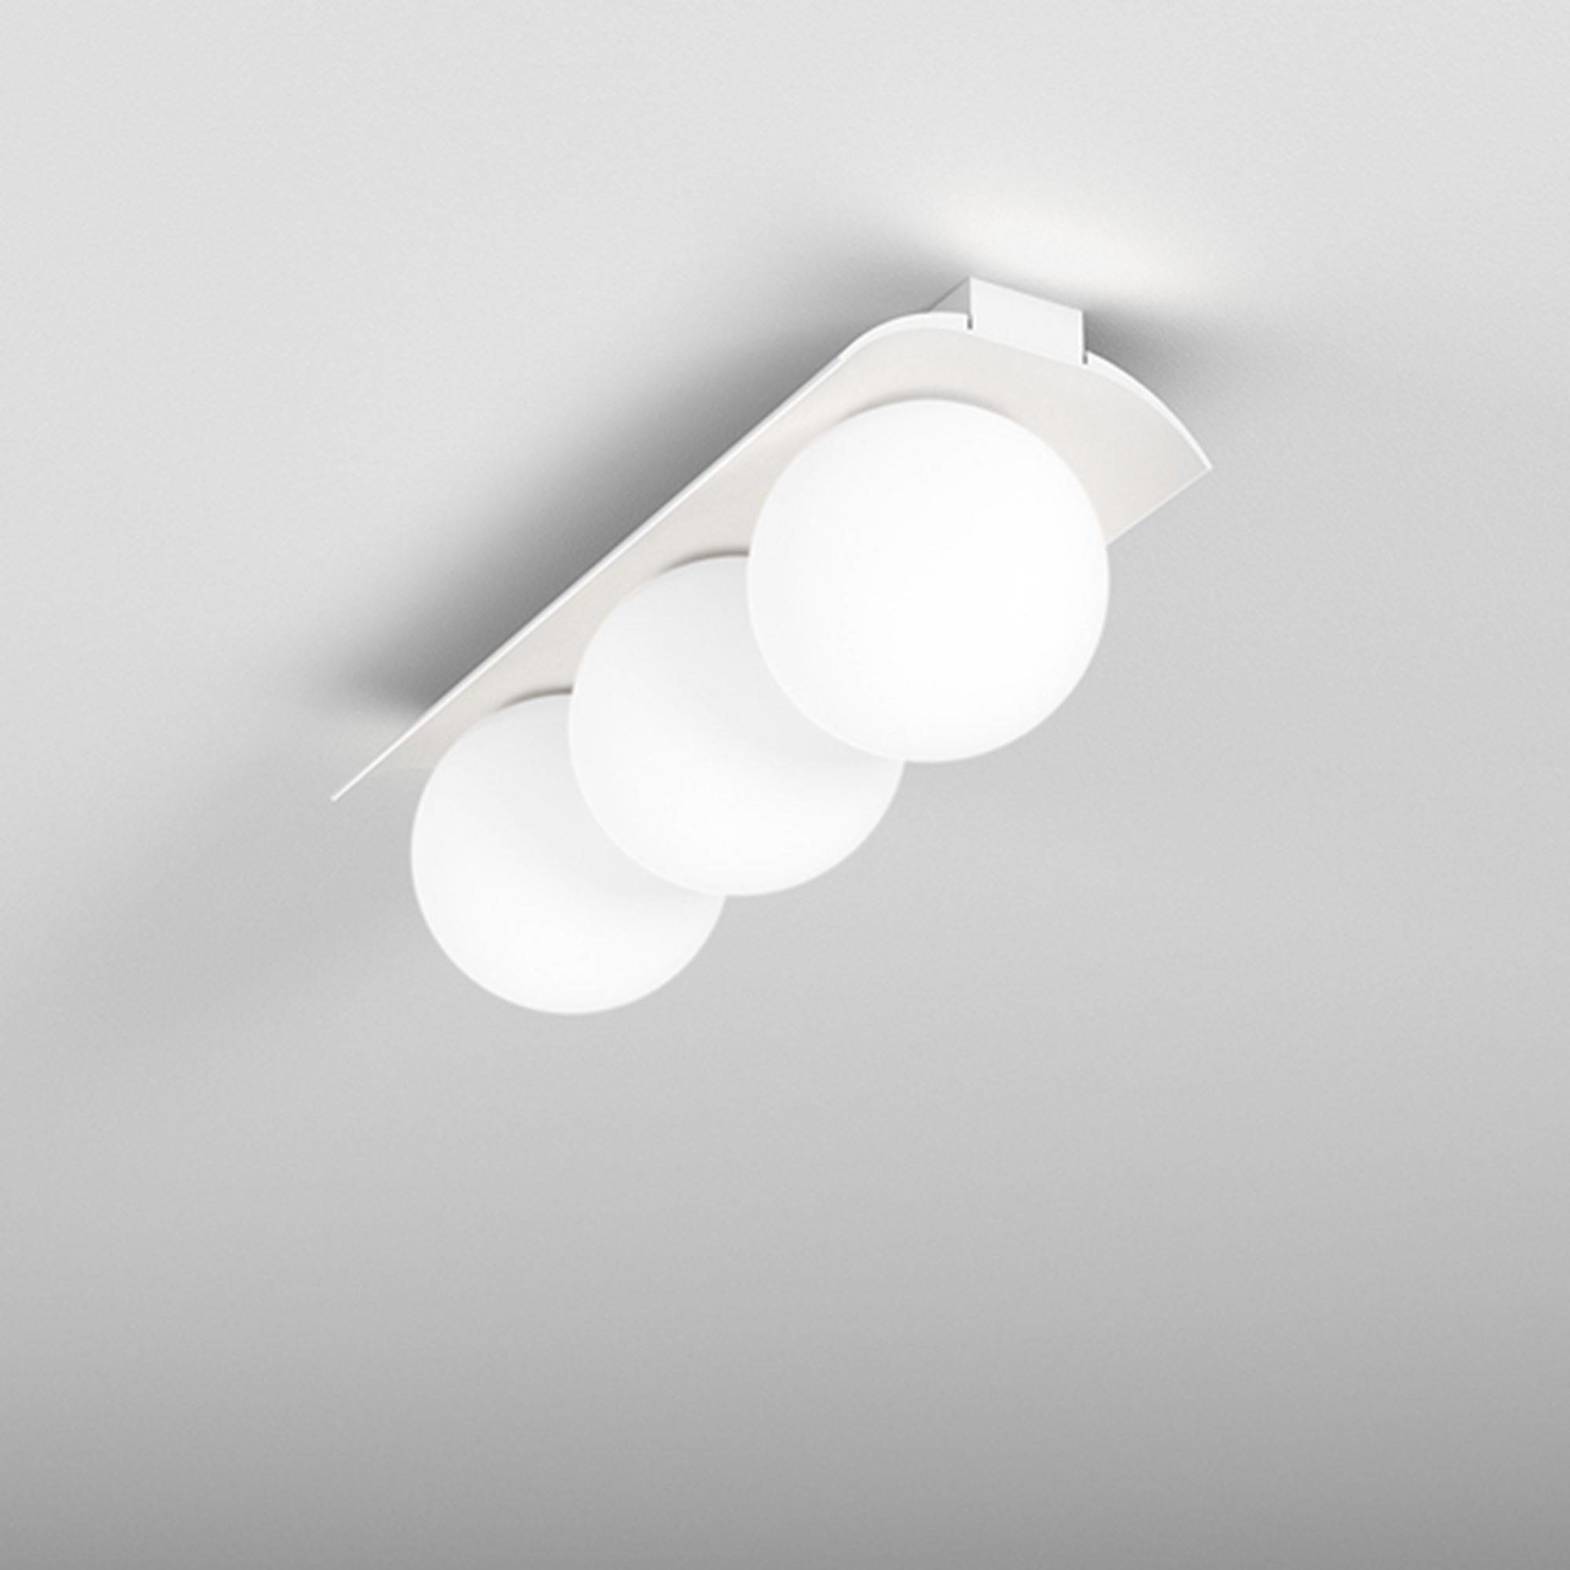 Aqform :: Lampa sufitowa / plafon Modern Ball biała szer. 51 cm